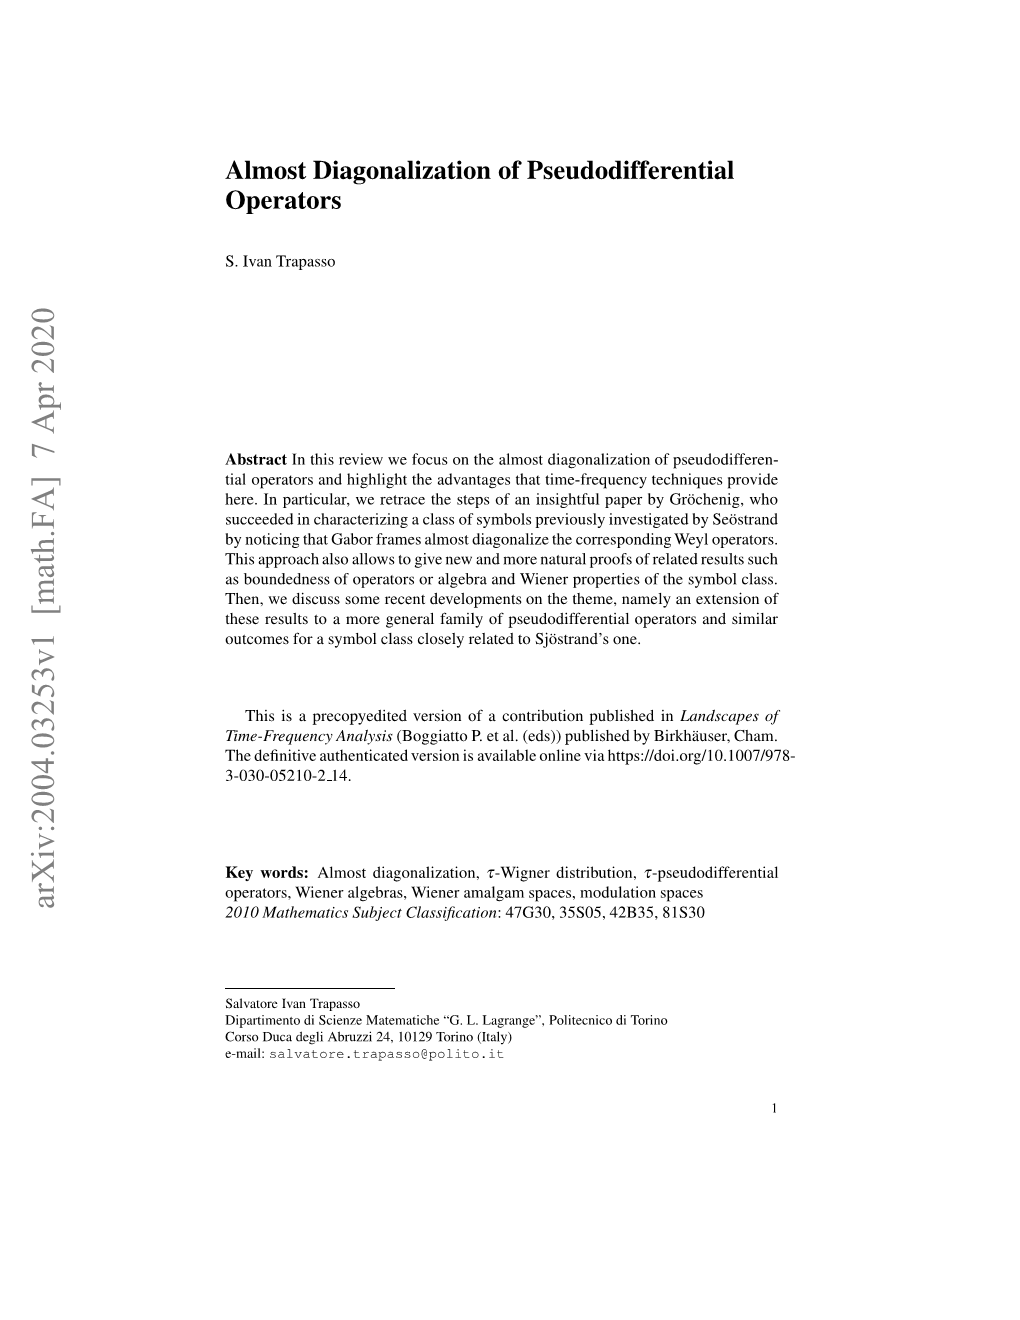 Almost Diagonalization of Pseudodifferential Operators 3